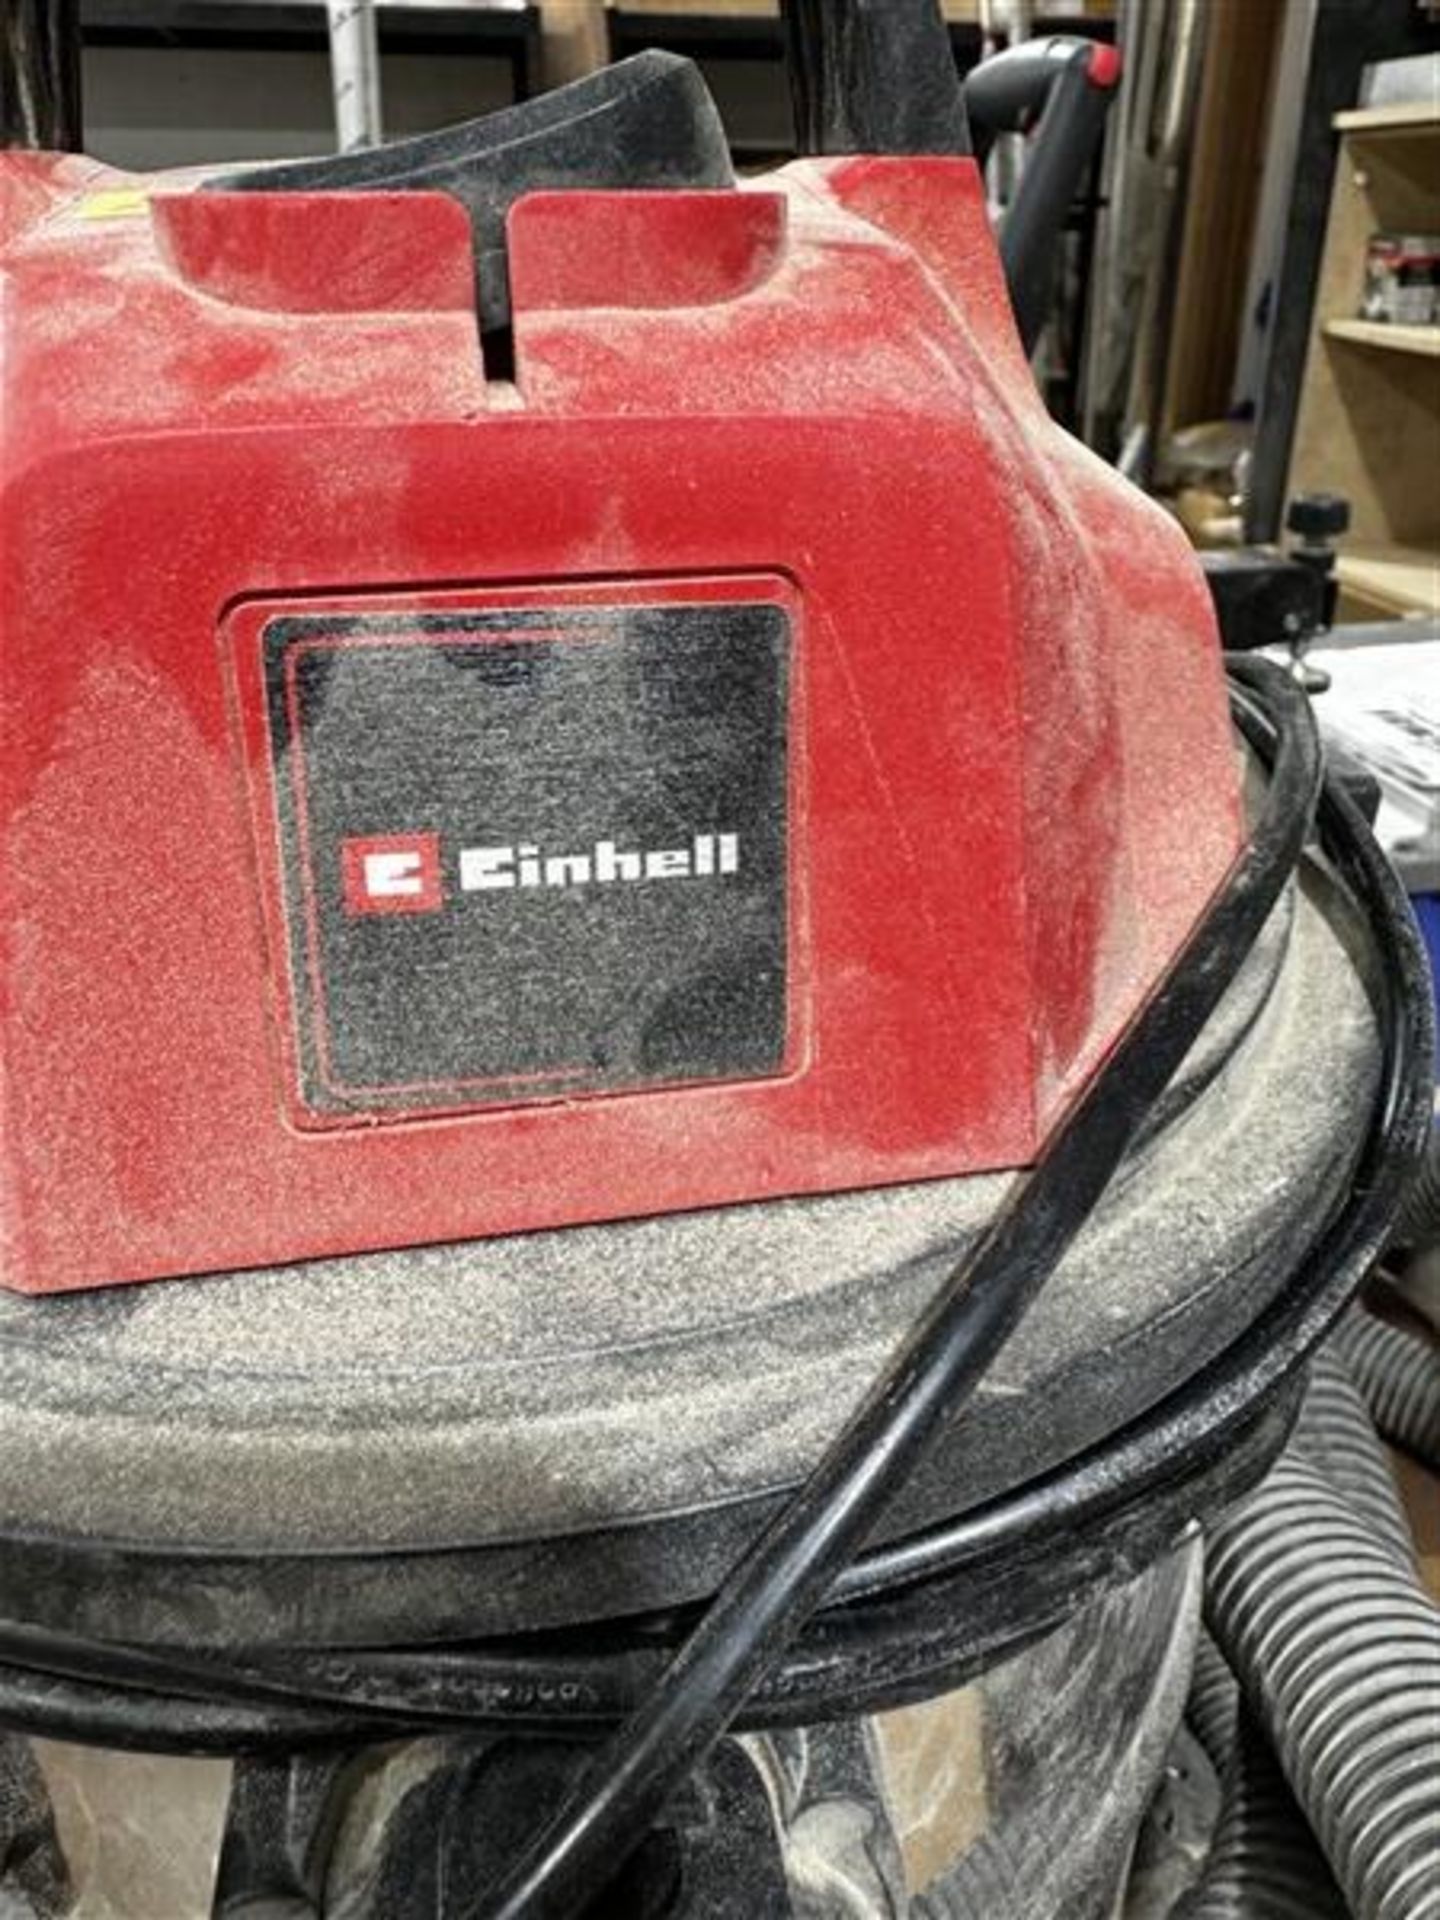 Einhell vacuum cleaner - Image 2 of 3